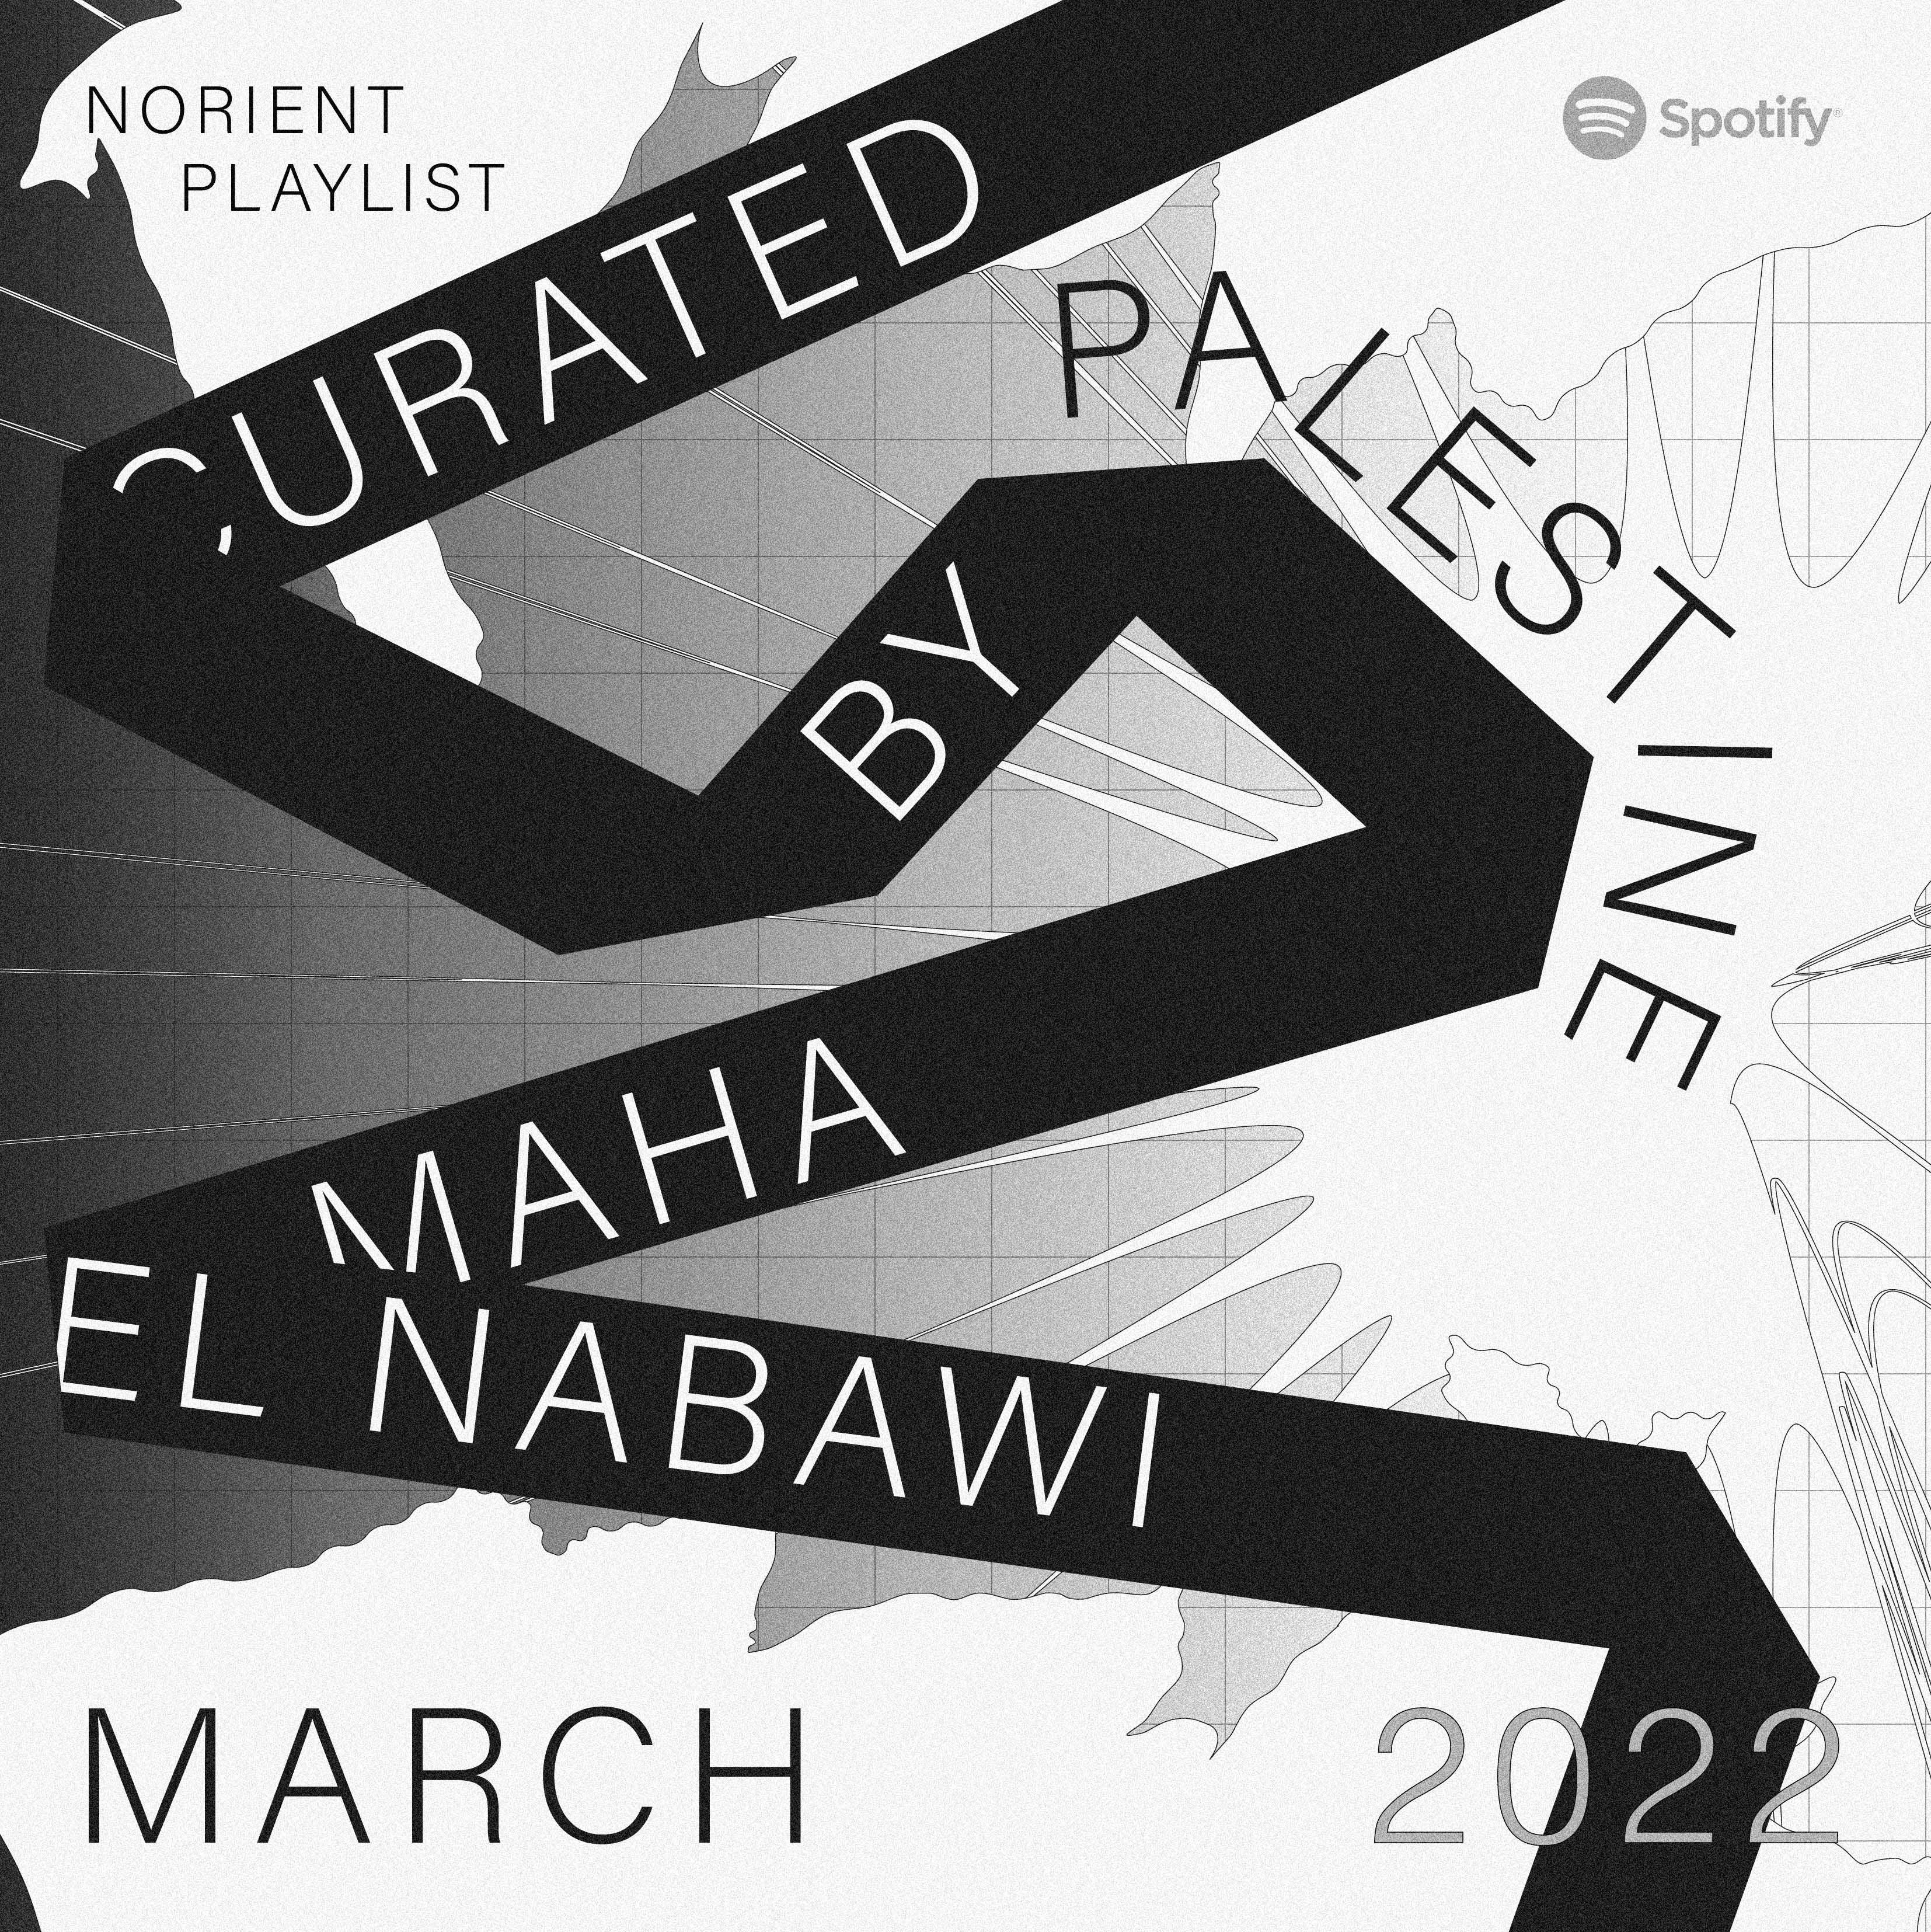  elnabawi_march-playlist_maria-uthe.jpg